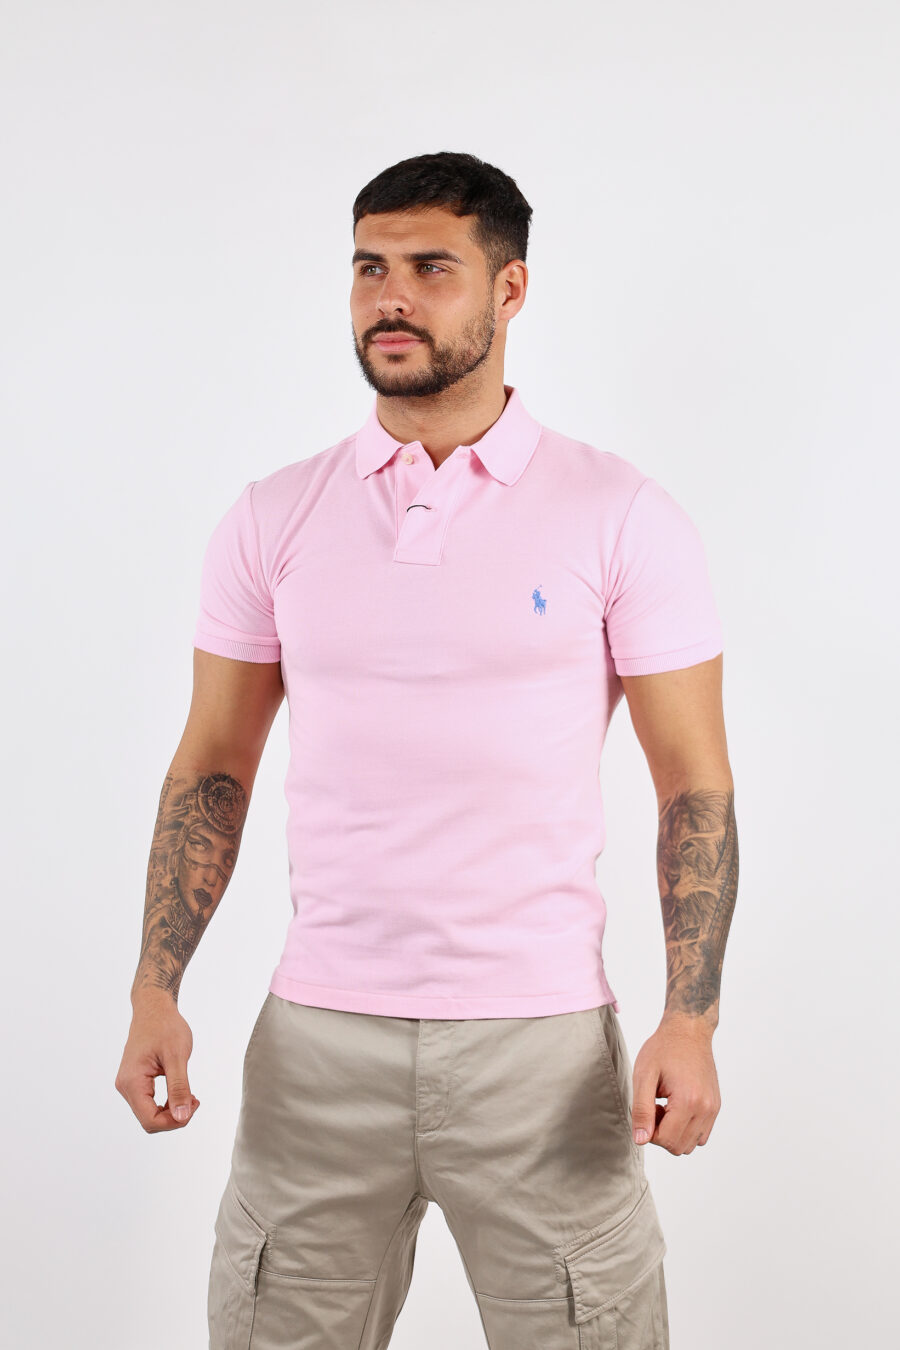 Pink polo shirt with mini-logo "polo" - BLS Fashion 160